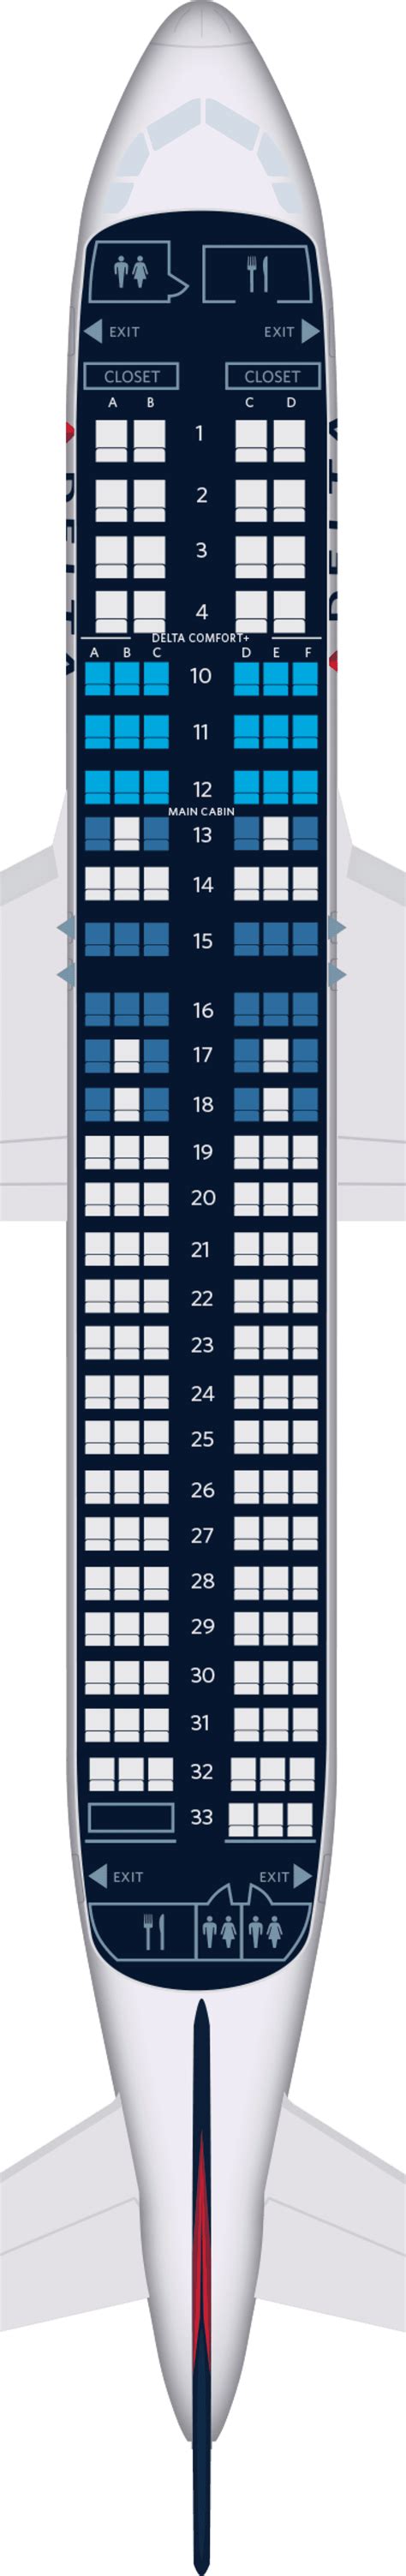 tempat duduk 186. nada 28-29". lebar 17". berbaring 3". Dengan Airbus A320-200neo, AirAsia menawarkan kelas ekonomi yang disesuaikan untuk kenyamanan regional. Dengan 186 kursi, kabinnya modern dan ditata dengan baik, memastikan pengalaman penerbangan yang menyenangkan. Tempat duduknya praktis, dan berbagai pilihan hiburan dalam …. 